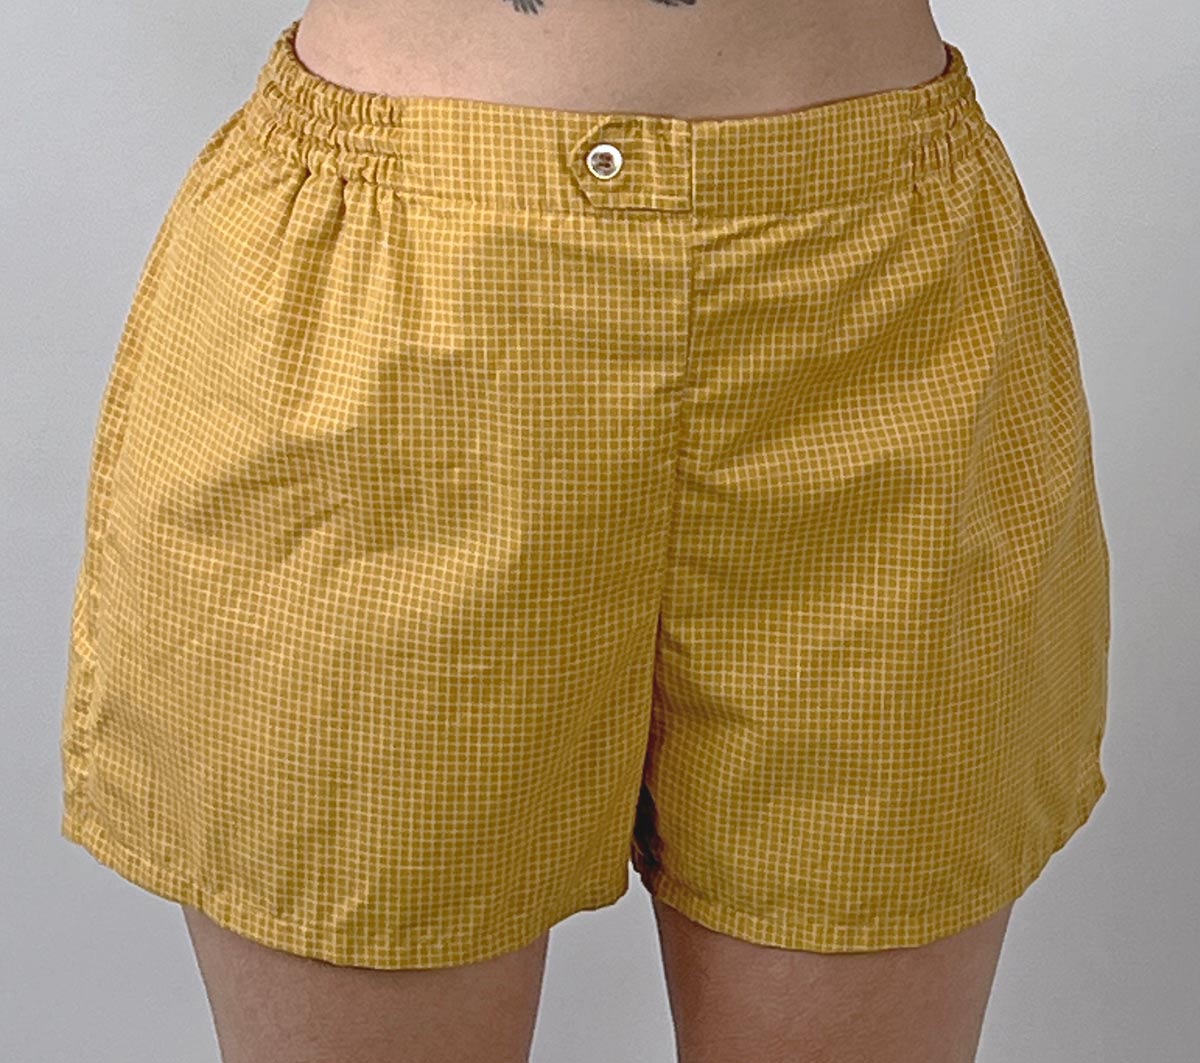 1950s to 1960s cabana shorts, NOS